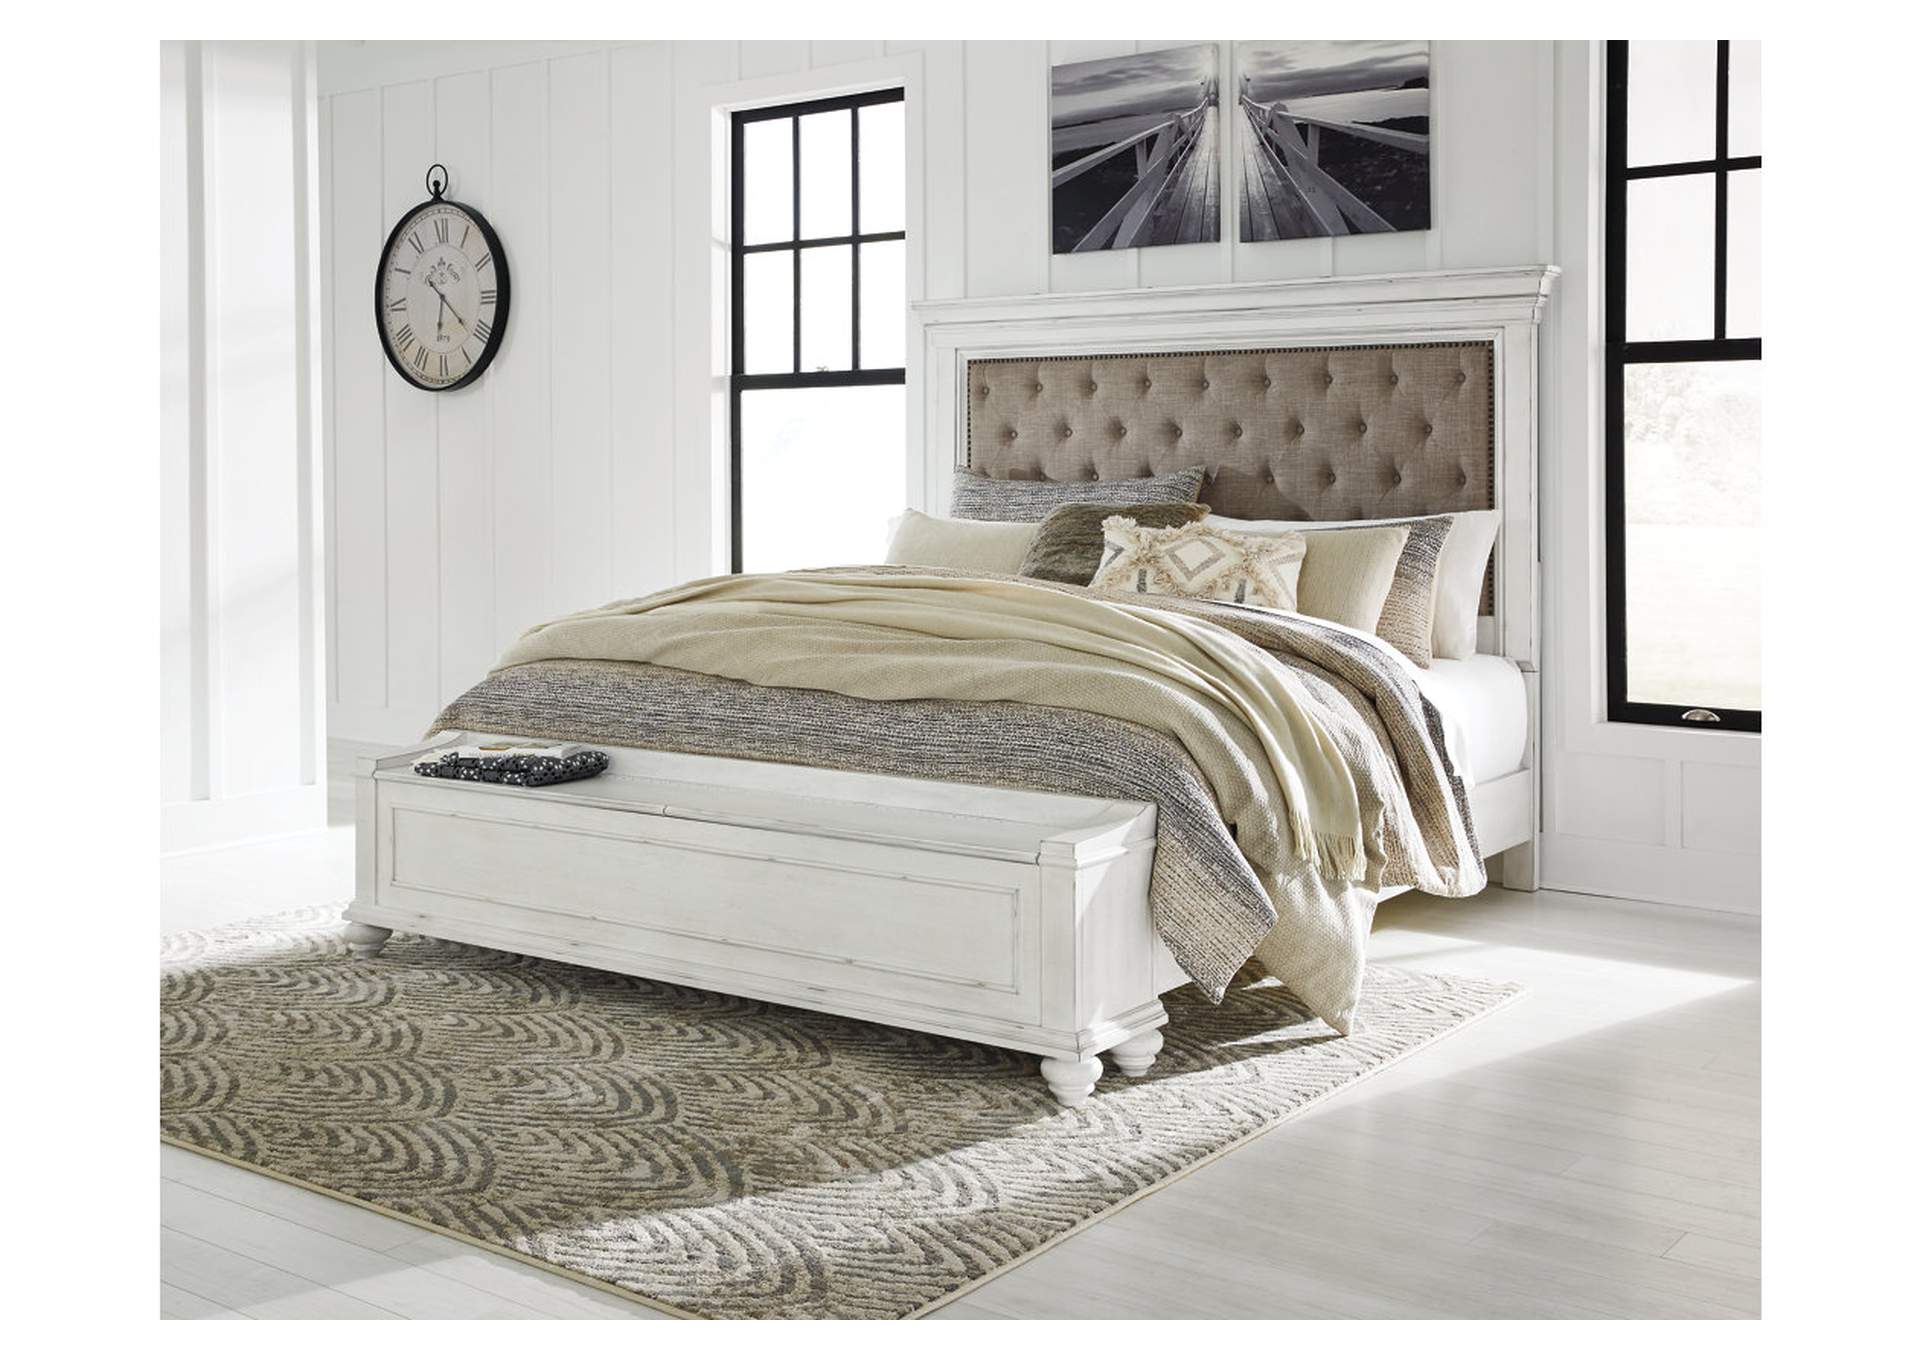 Kanwyn King Upholstered Storage Bed, Dresser, Mirror and Nightstand,Benchcraft